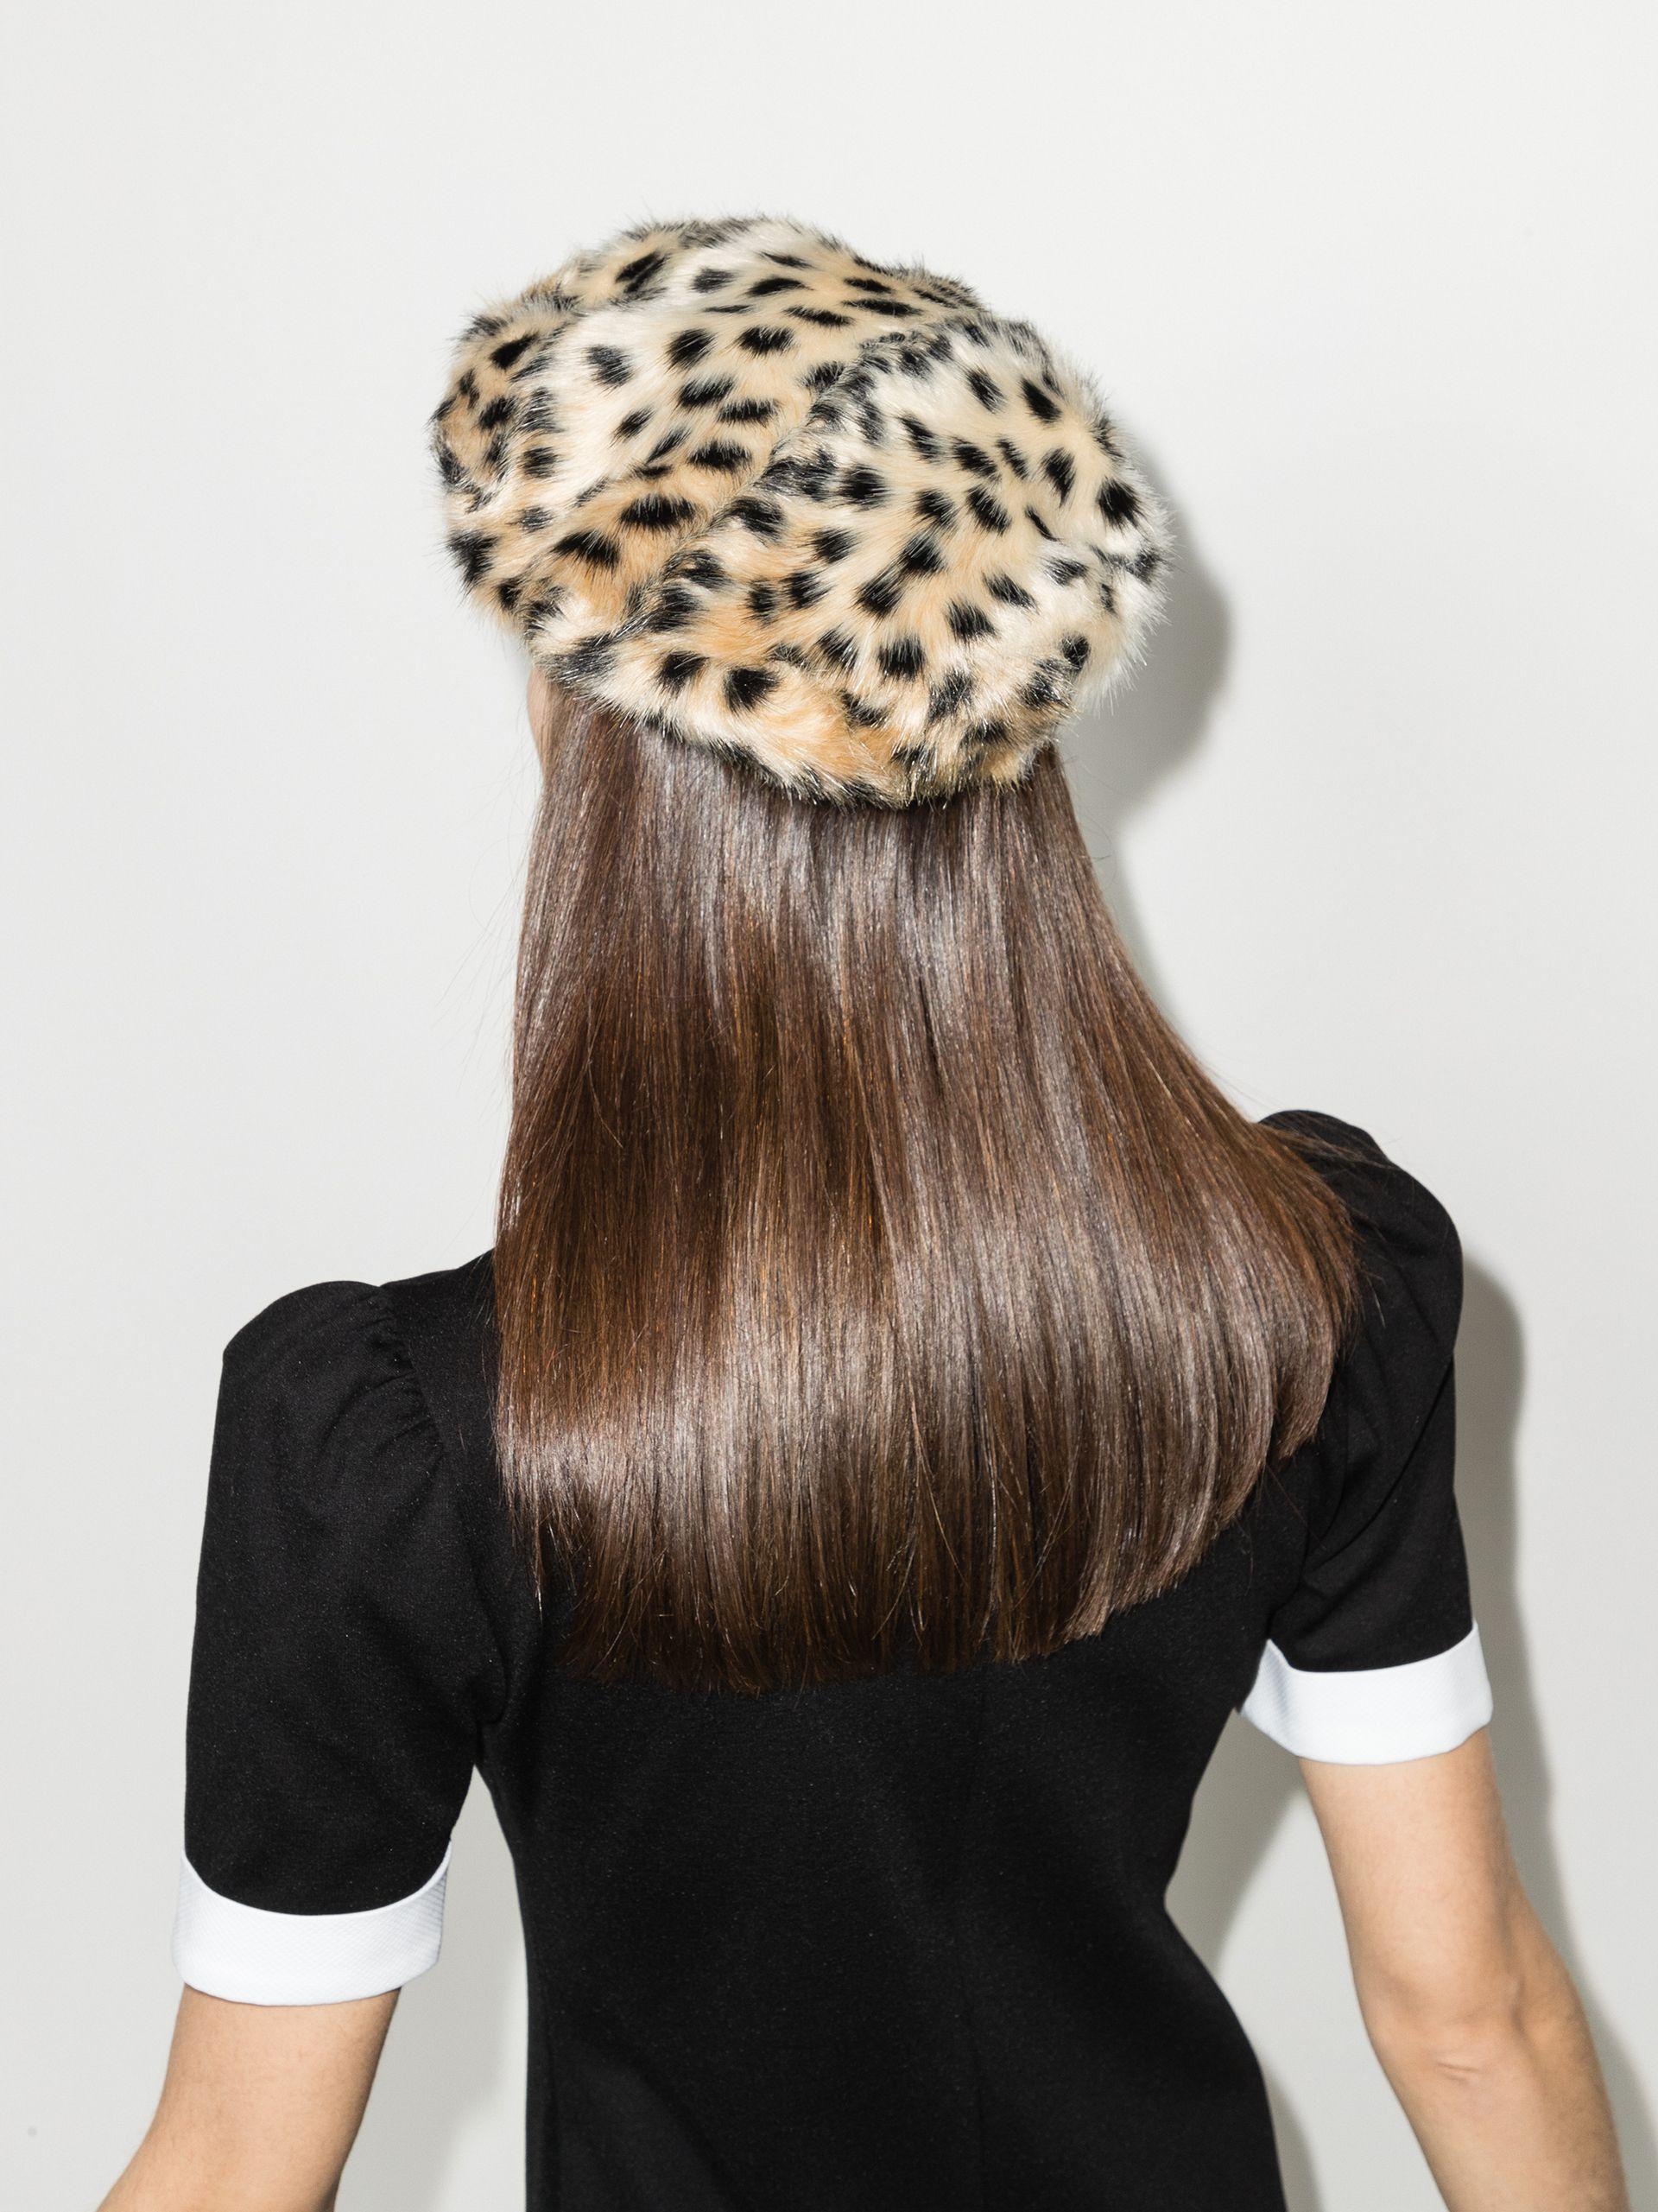 Beret Leopard Hats for Women for sale